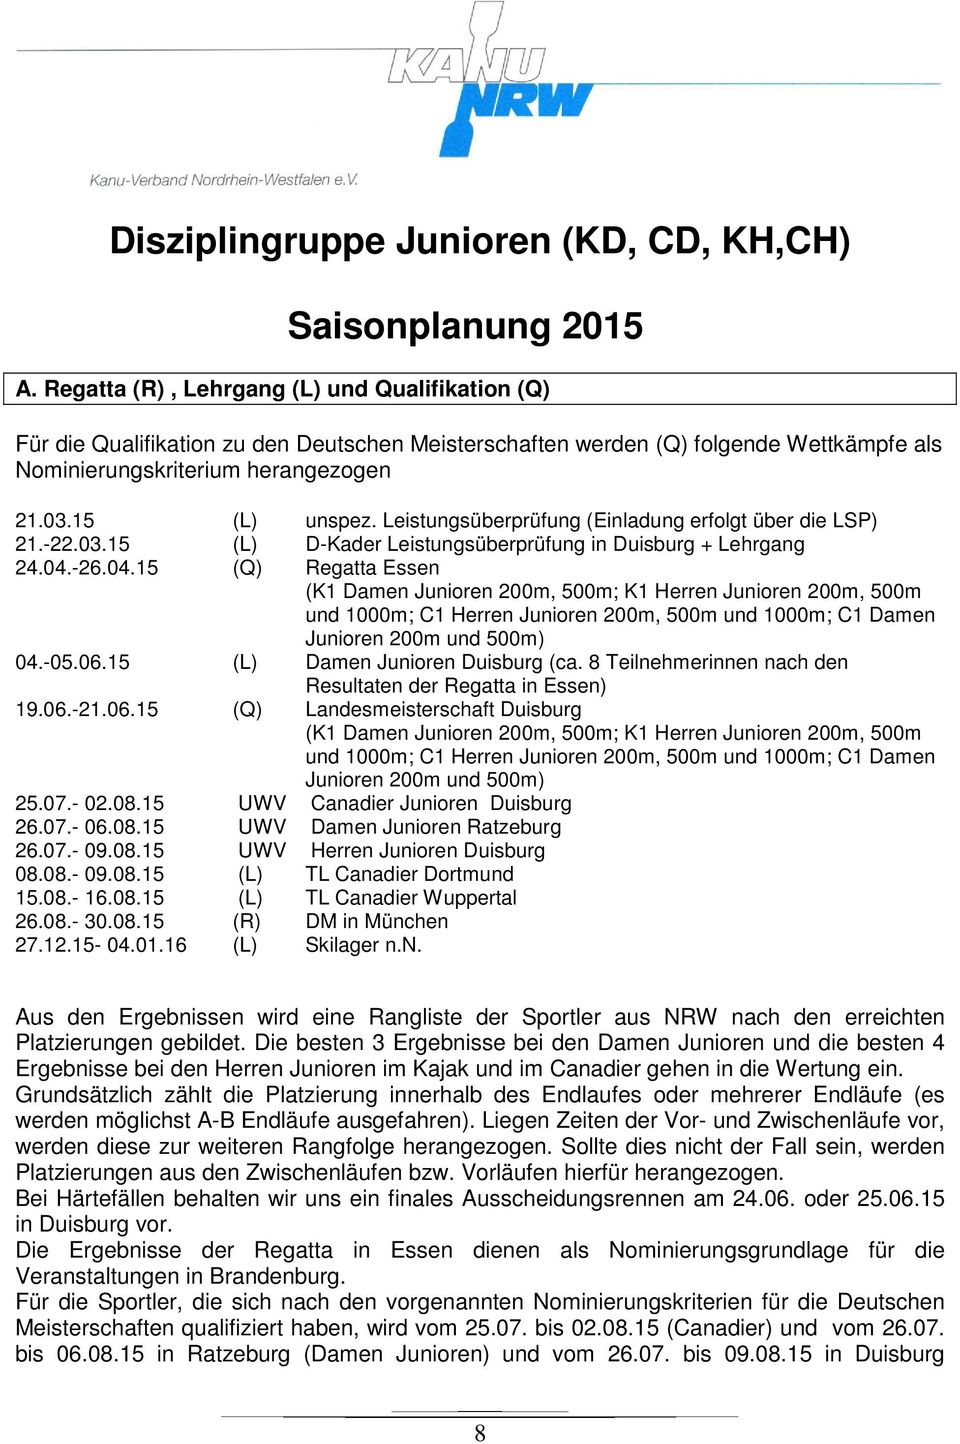 Leistungsüberprüfung (Einladung erfolgt über die LSP) 21.-22.03.15 (L) D-Kader Leistungsüberprüfung in Duisburg + Lehrgang 24.04.